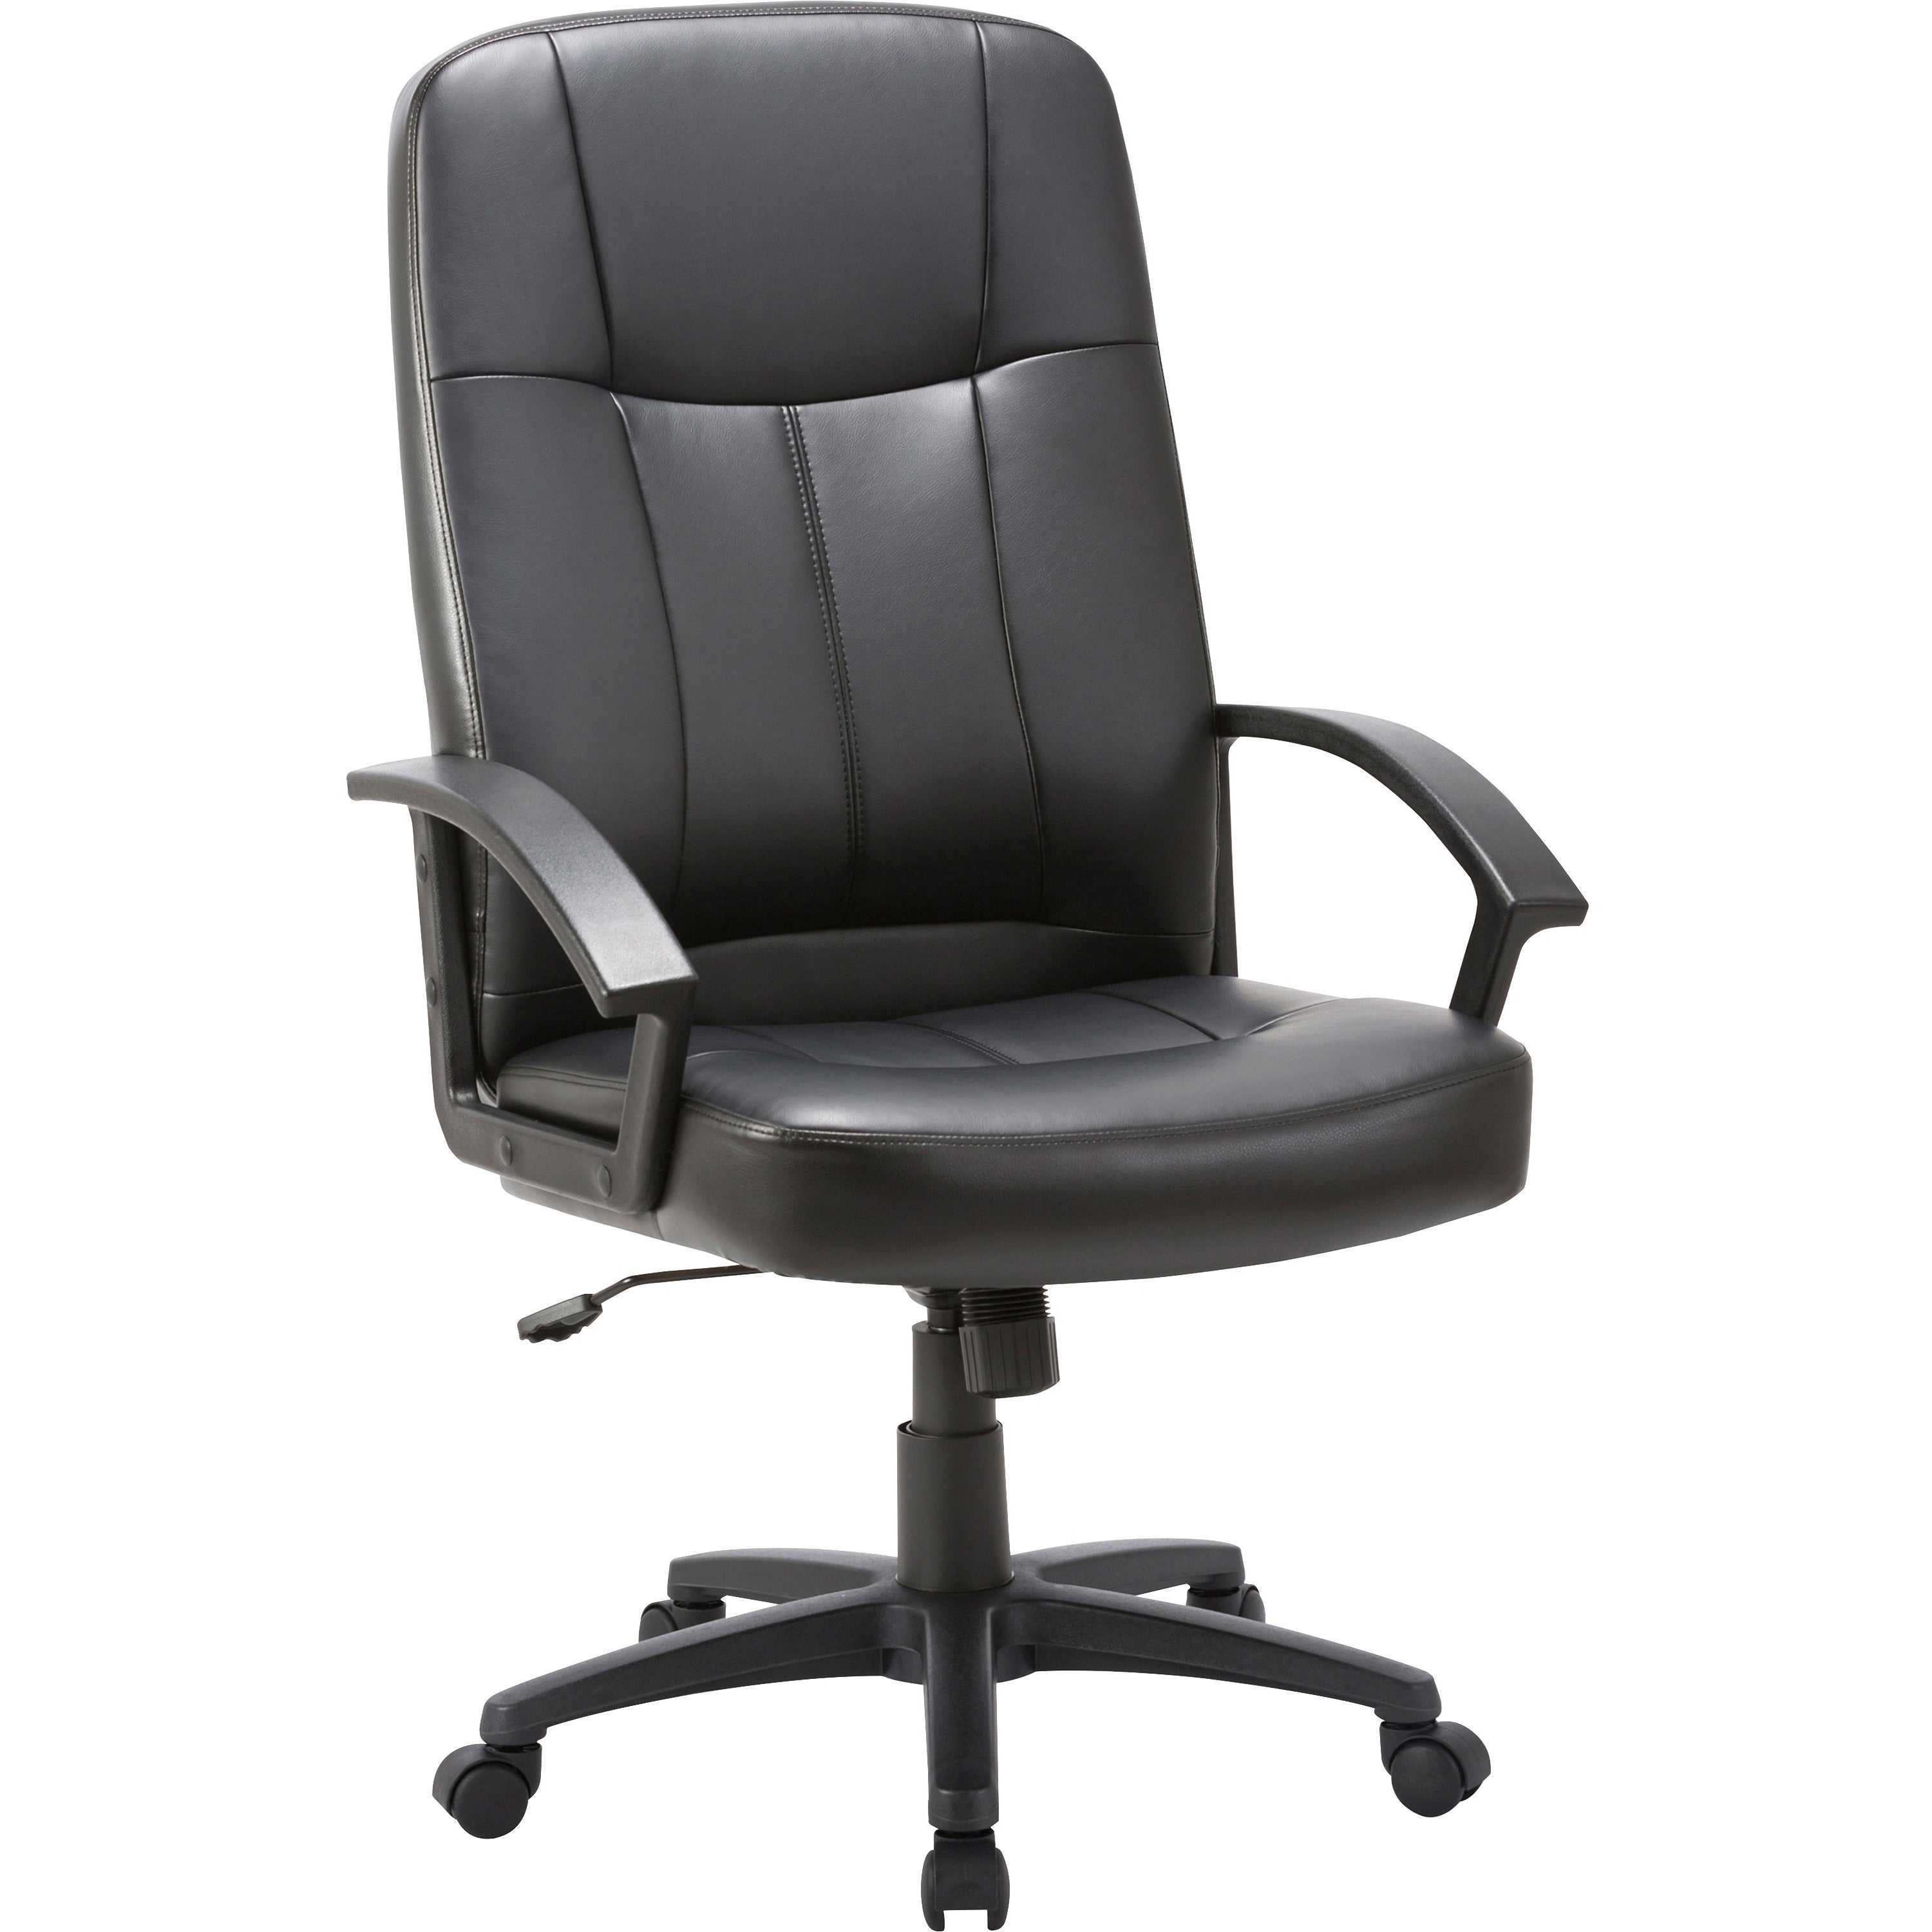 Lorell Chadwick Series Executive High-Back Chair - Black Leather Seat - Black Frame - 5-star Base - Black - 1 Each - 